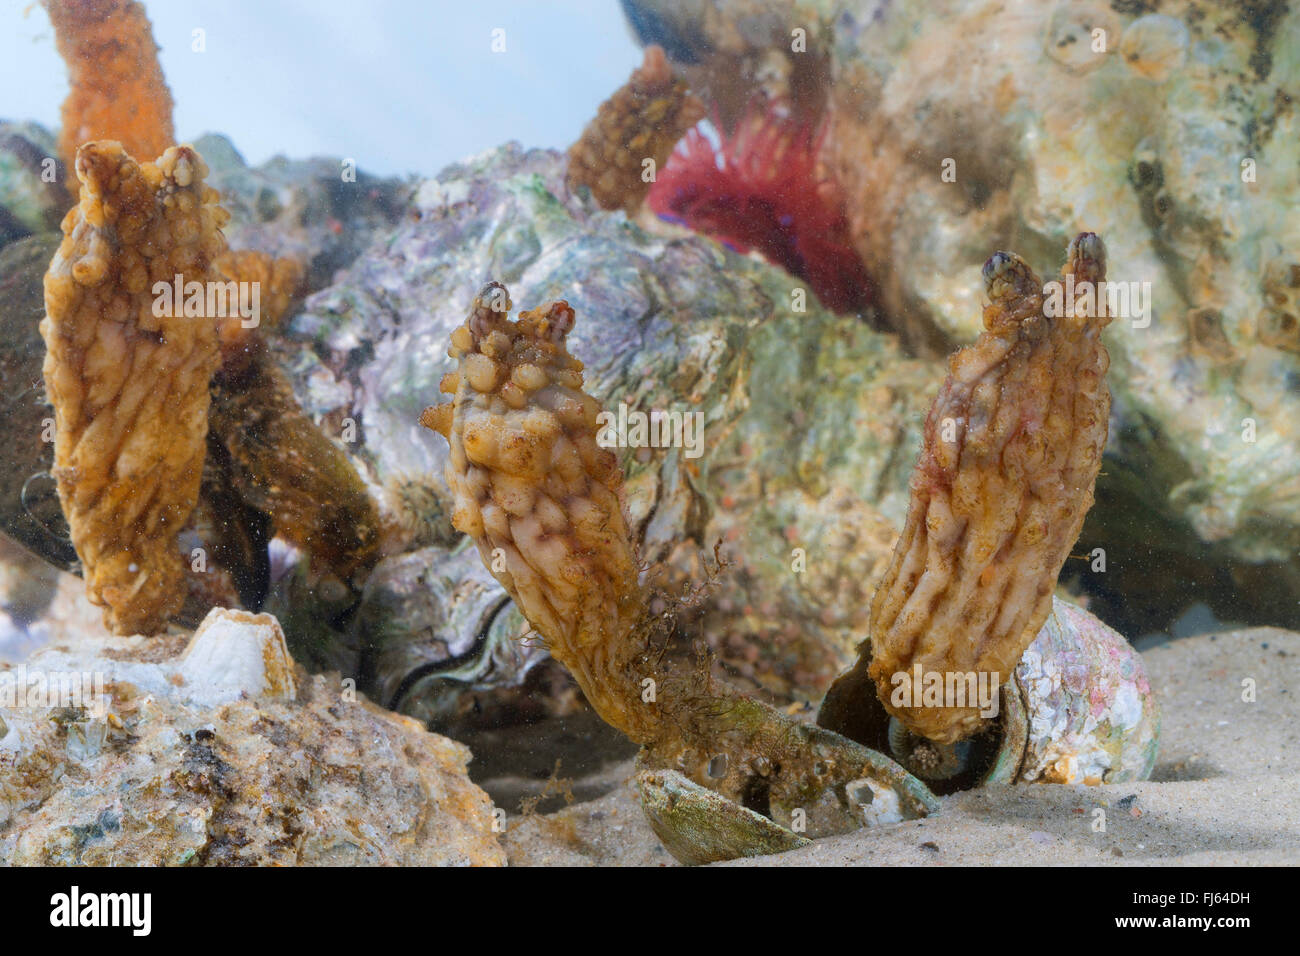 Stalked Sea Squirt, Asian sea squirt, rough sea squirt, leathery sea squirt, folded sea squirt (Styela clava), colony Stock Photo